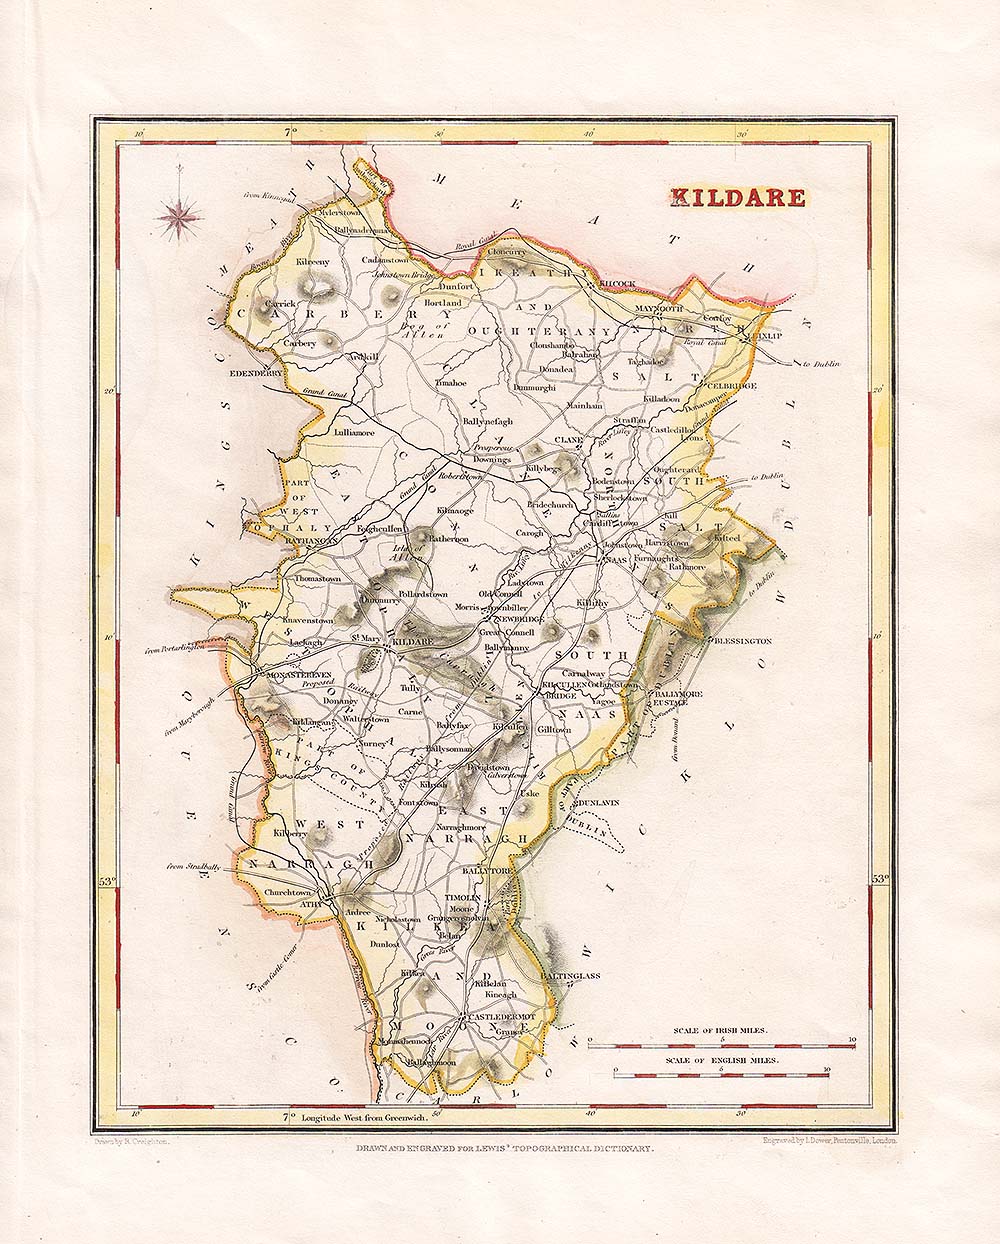 Kildare  -  Lewis Atlas comprising the Counties of Ireland